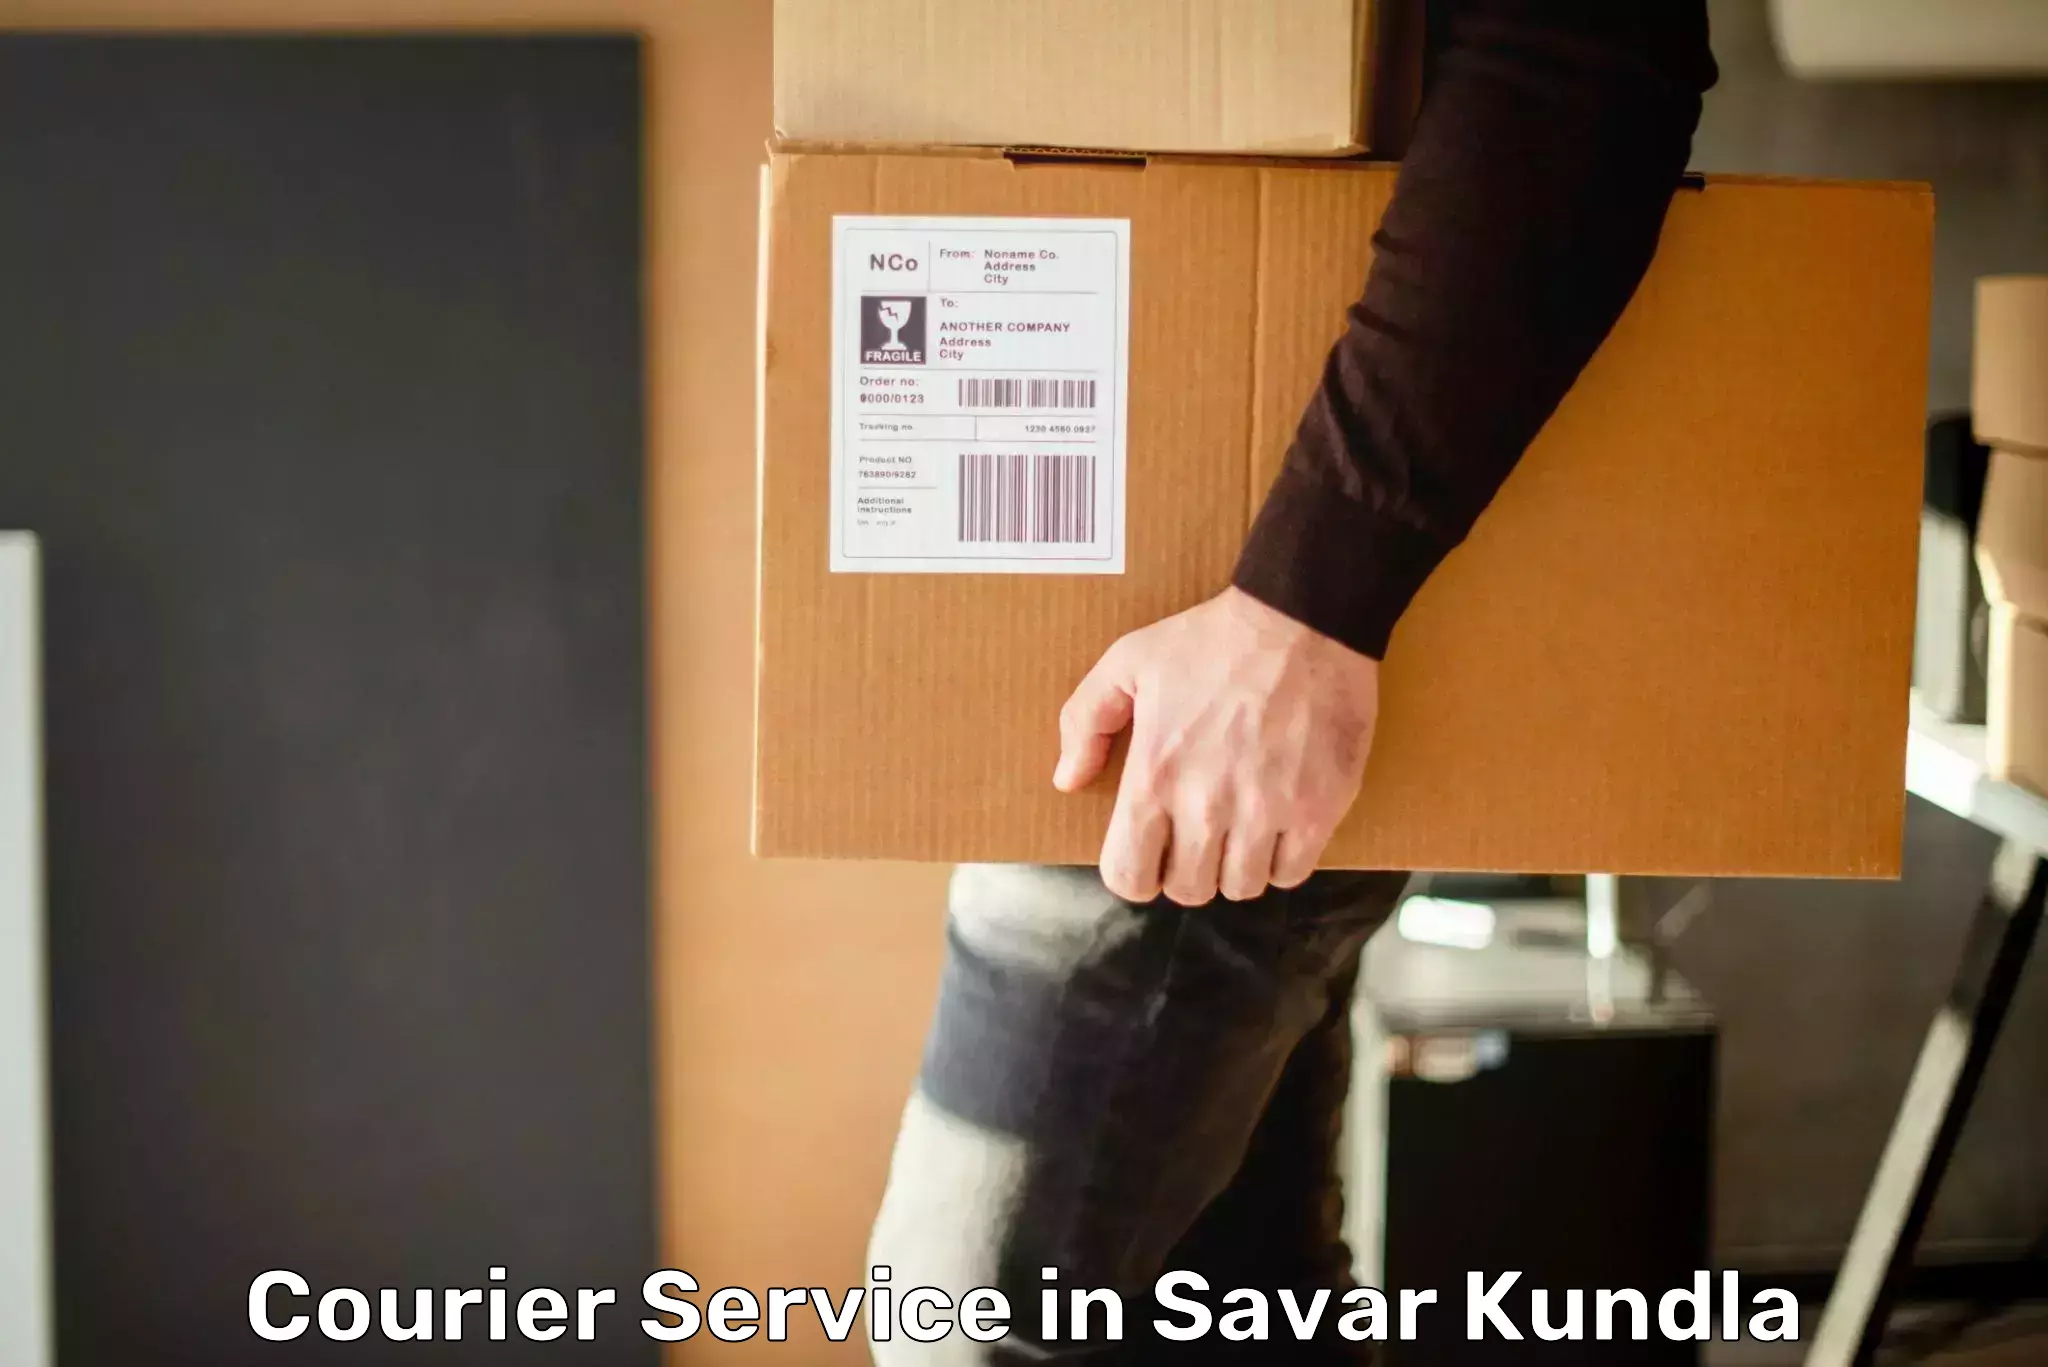 Tech-enabled shipping in Savar Kundla